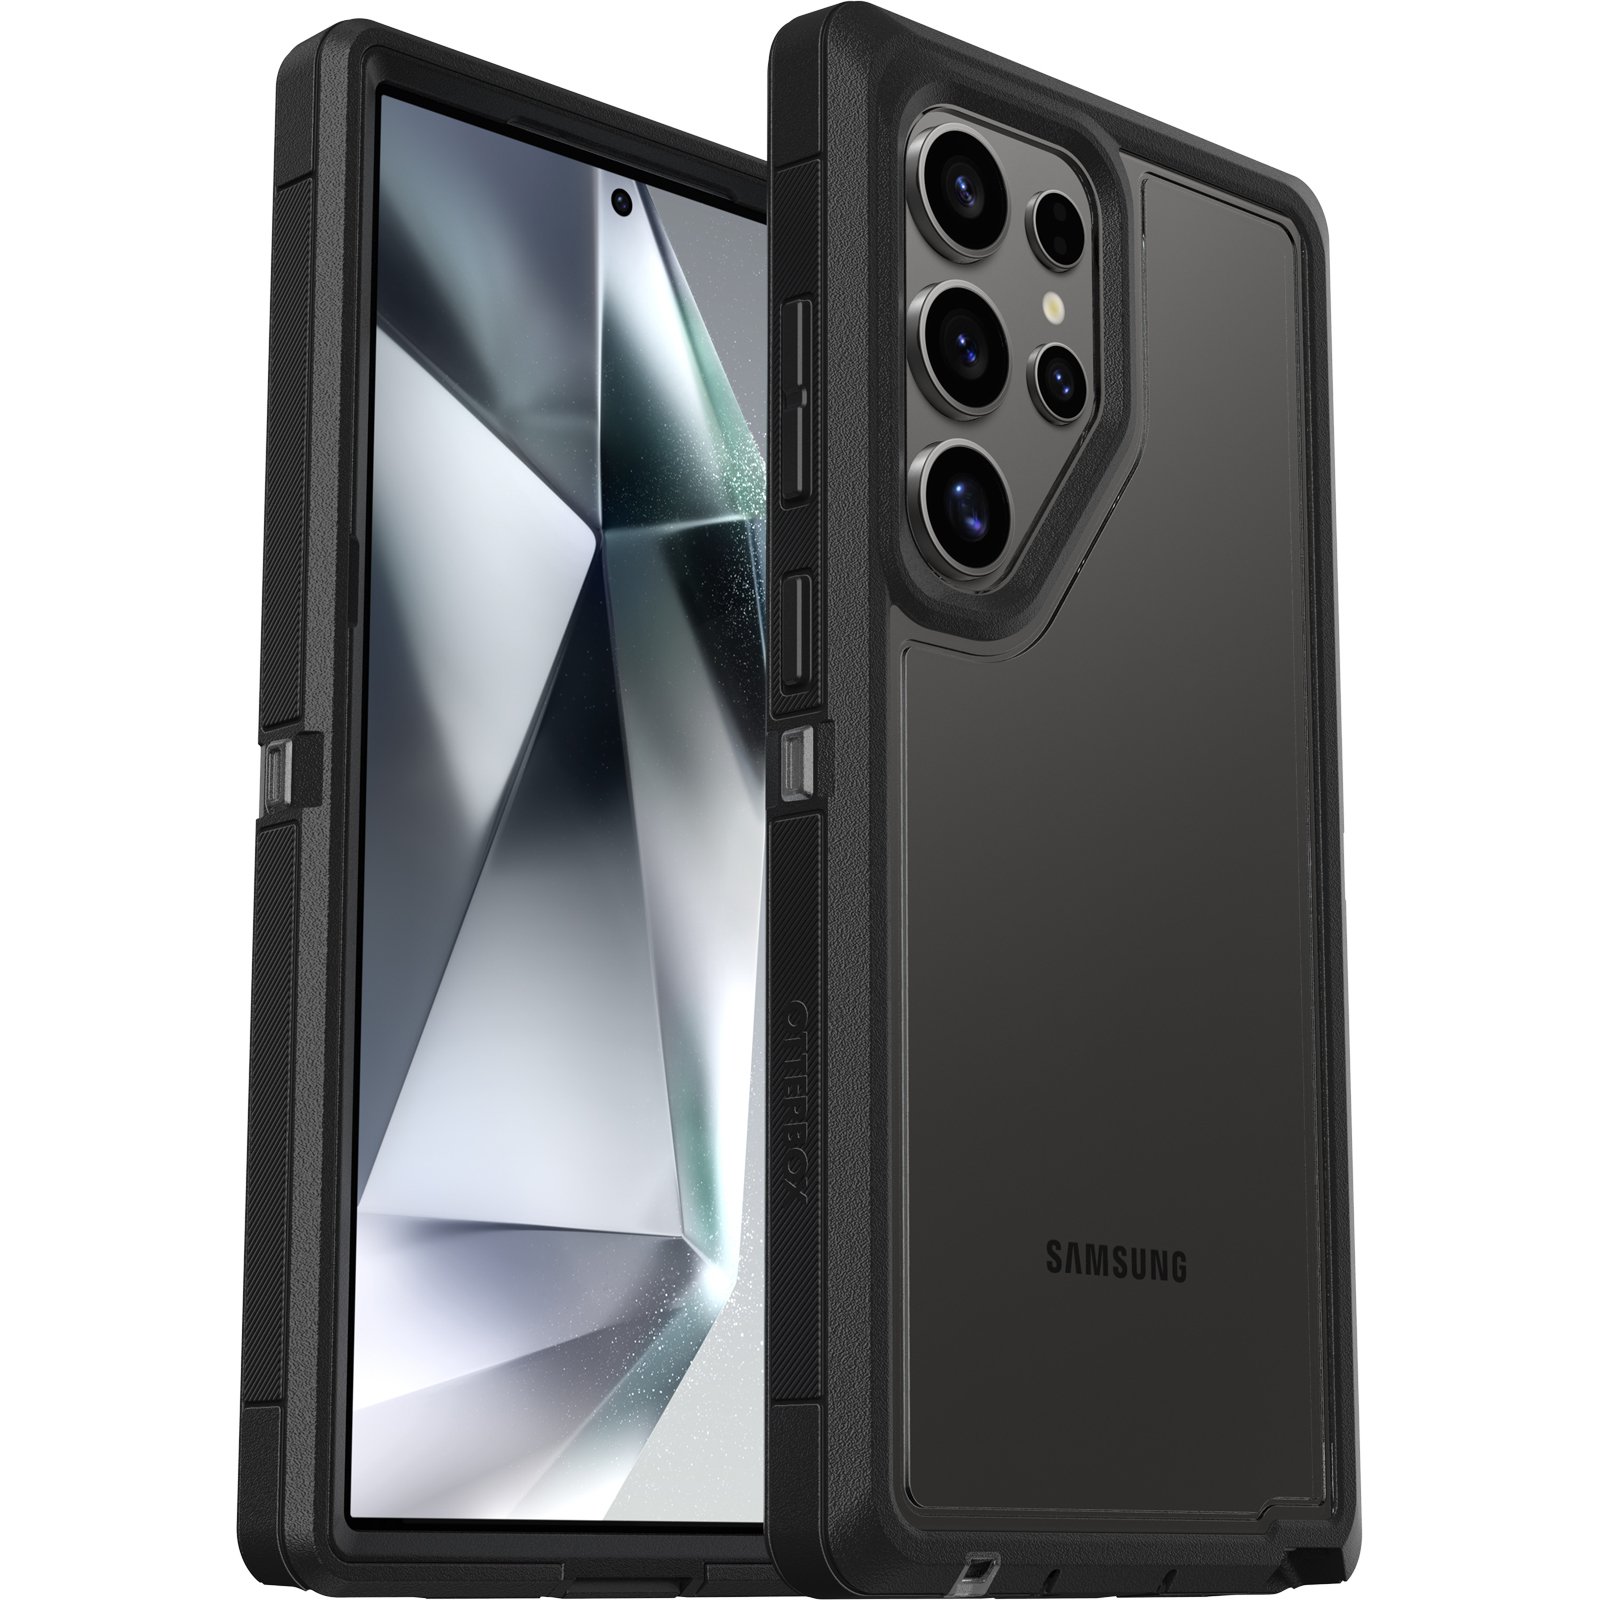 Funda Otterbox Symmetry para celular compatible con Galaxy S20 Plus